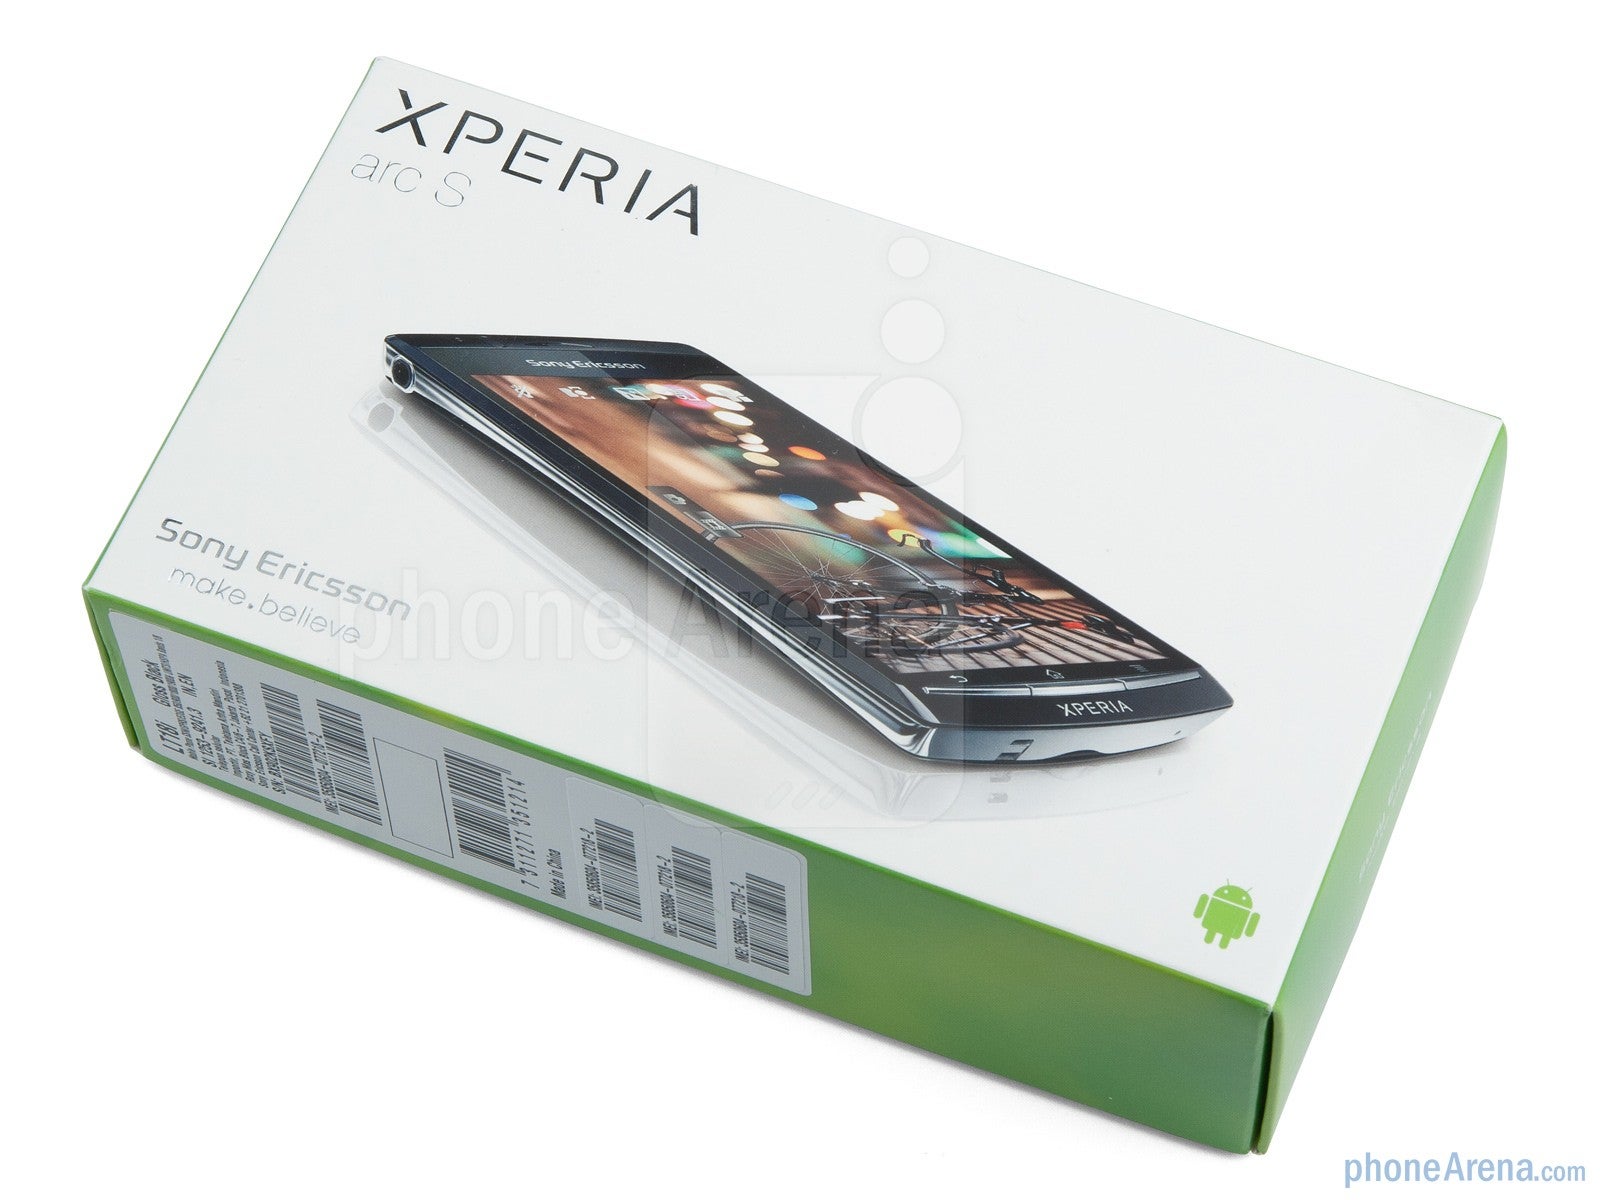 Sony Ericsson Xperia arc S Review